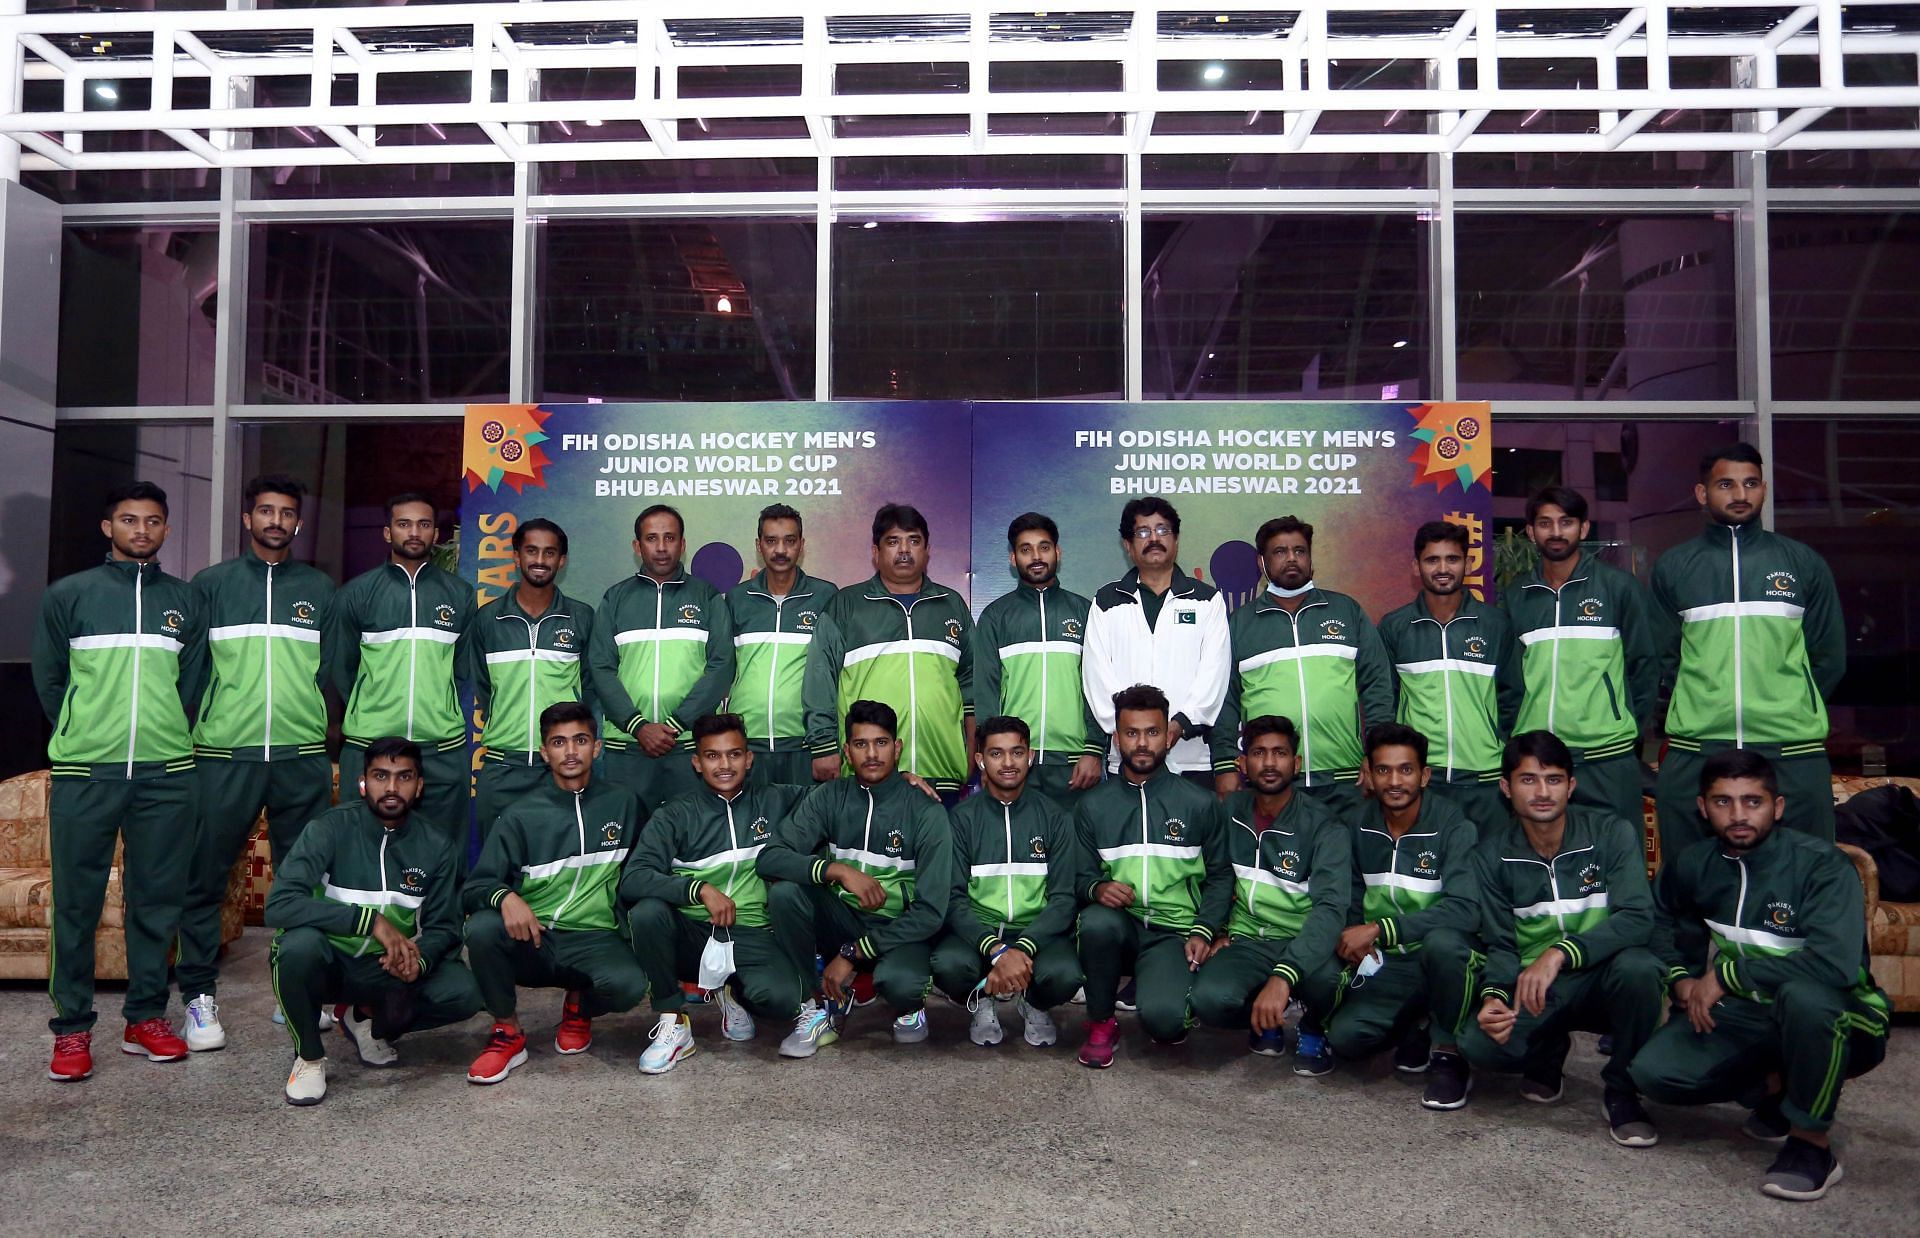 The Pakistan junior hockey team poses on arrival at the Bhubaneswar airport. (PC: Hockey India)